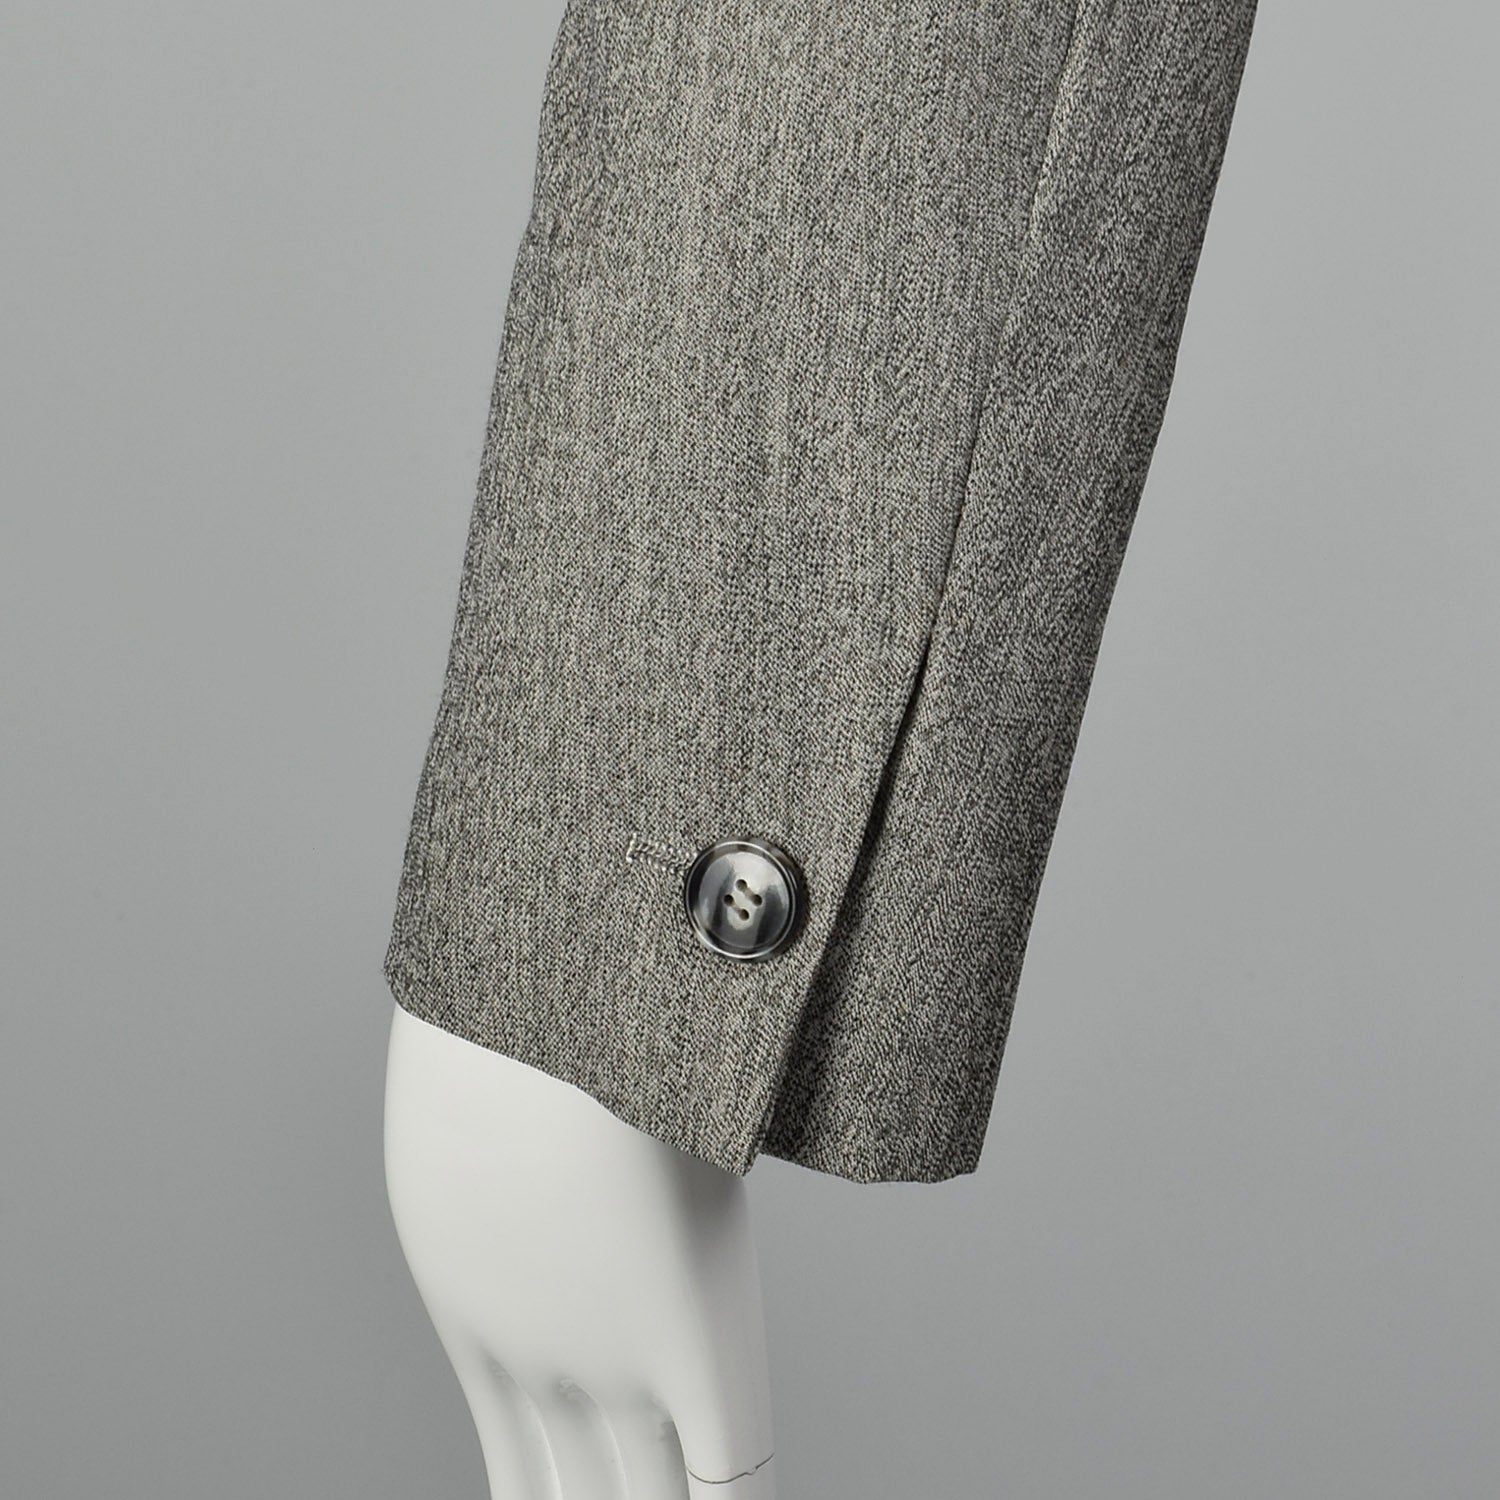 Medium Bill Blass 1980s Gray Wool Skirt Suit